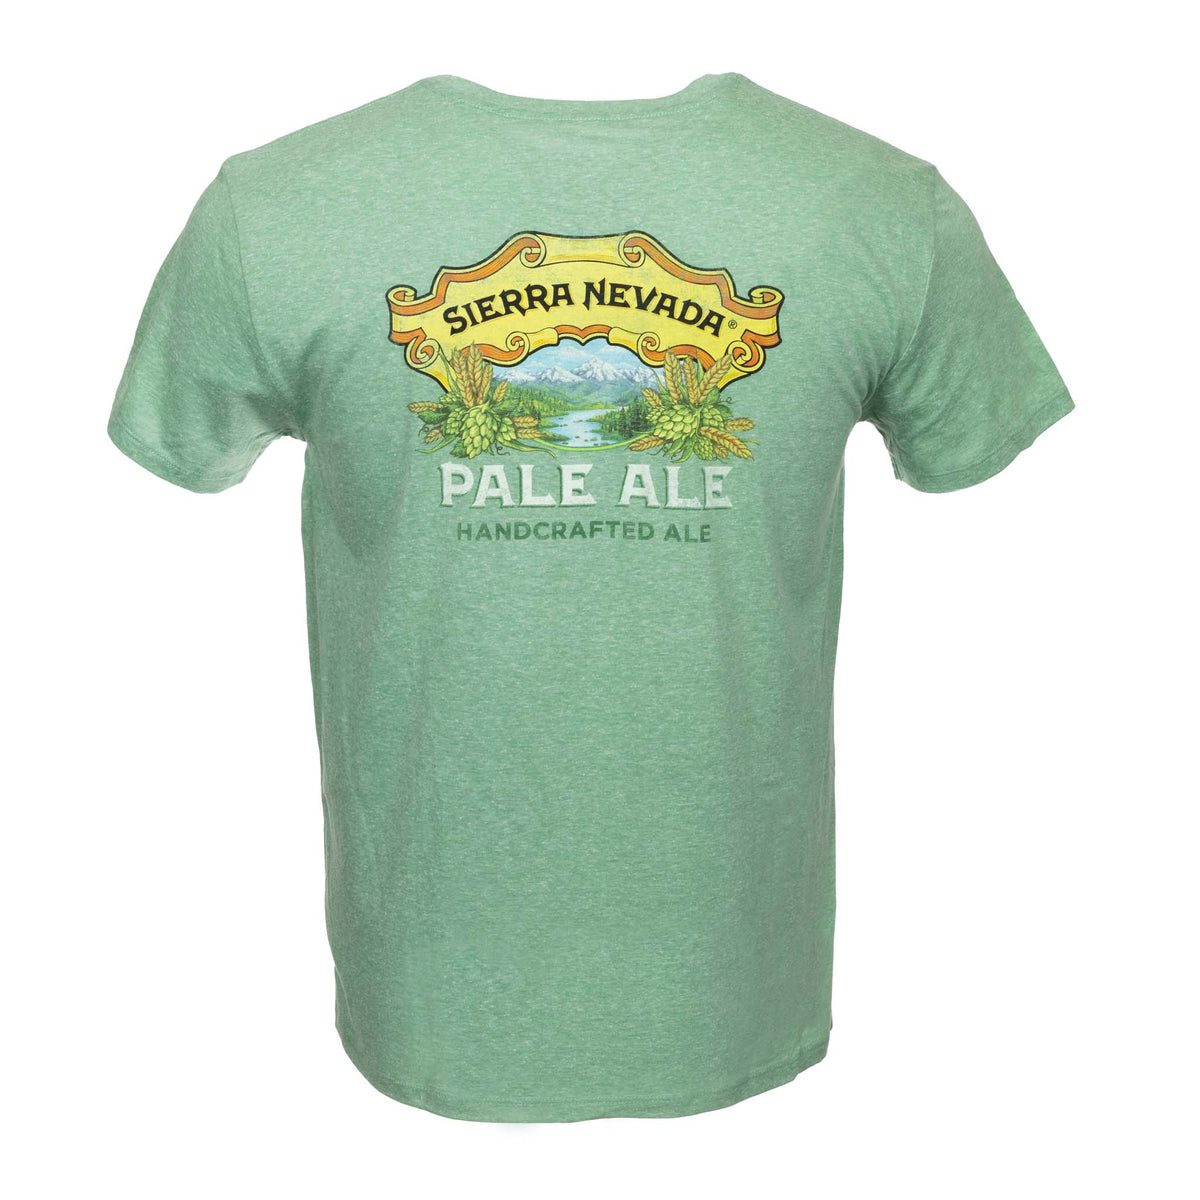 Sierra Nevada Pale Ale T-Shirt - Back view